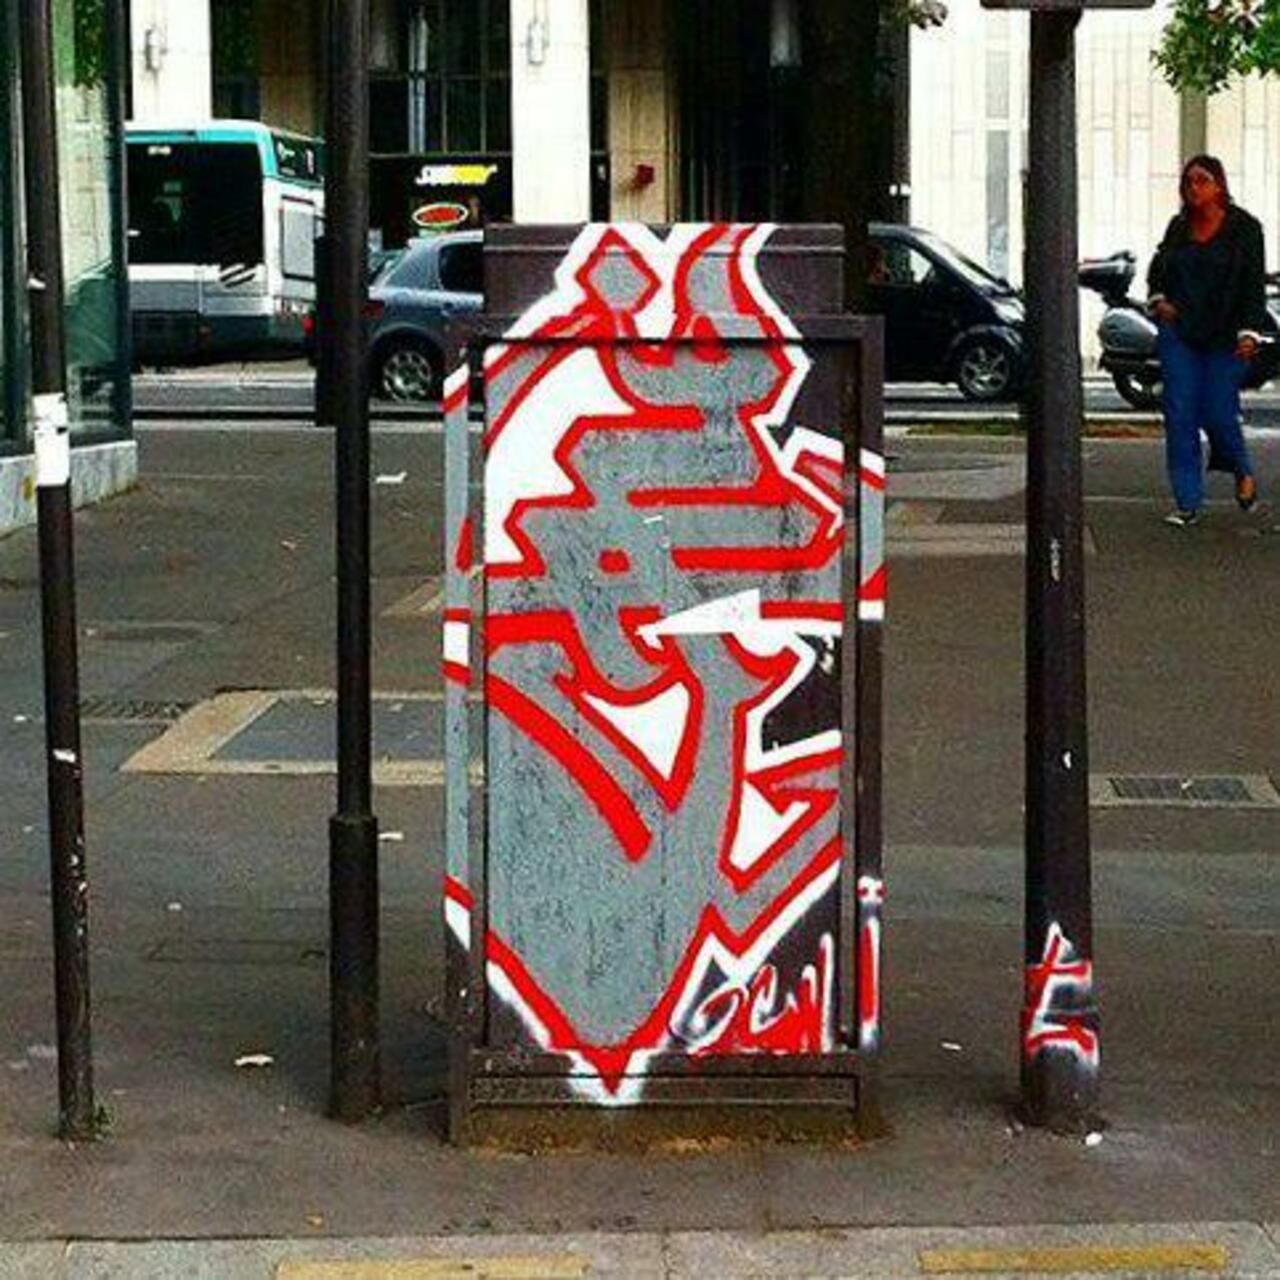 #streetart #streetarteverywhere #streetshot #graffitiart #graffiti #arturbain #armoireelectrique #stencil #sprayart… https://t.co/uxn41eElim